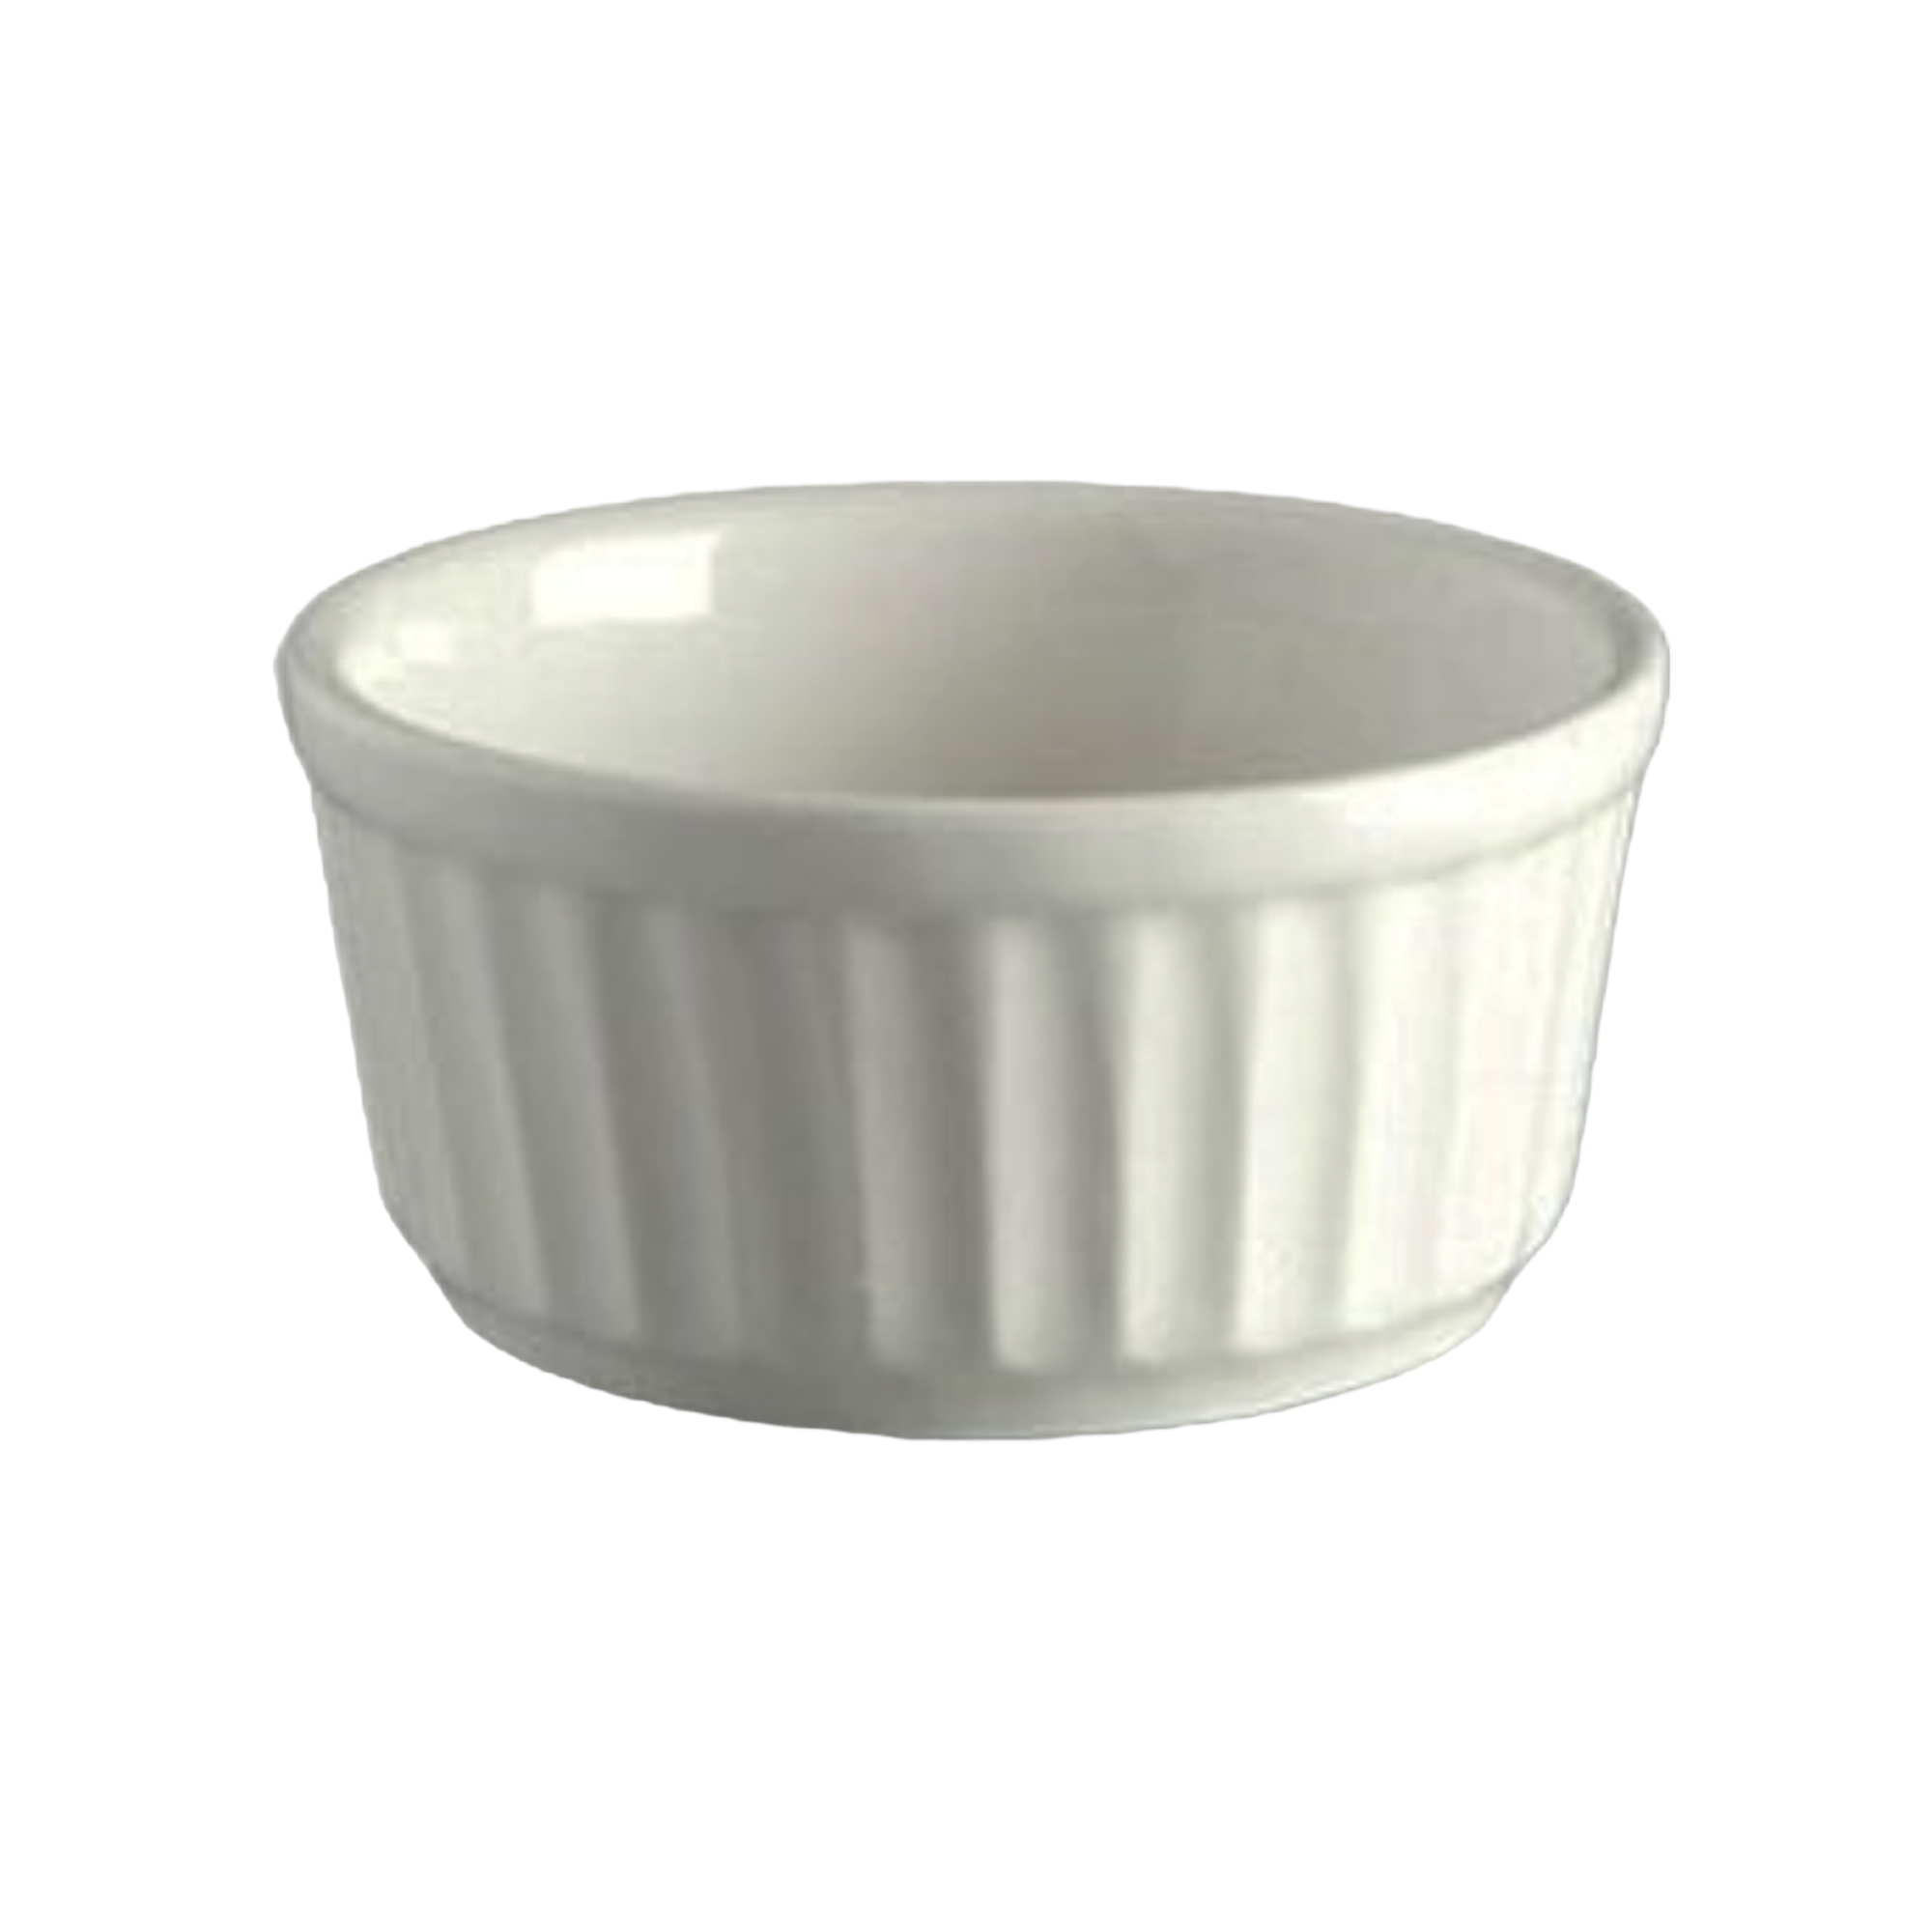 Ramekin Ceramic Ribbed 4.5cmx9cm White Baking Round Bowl